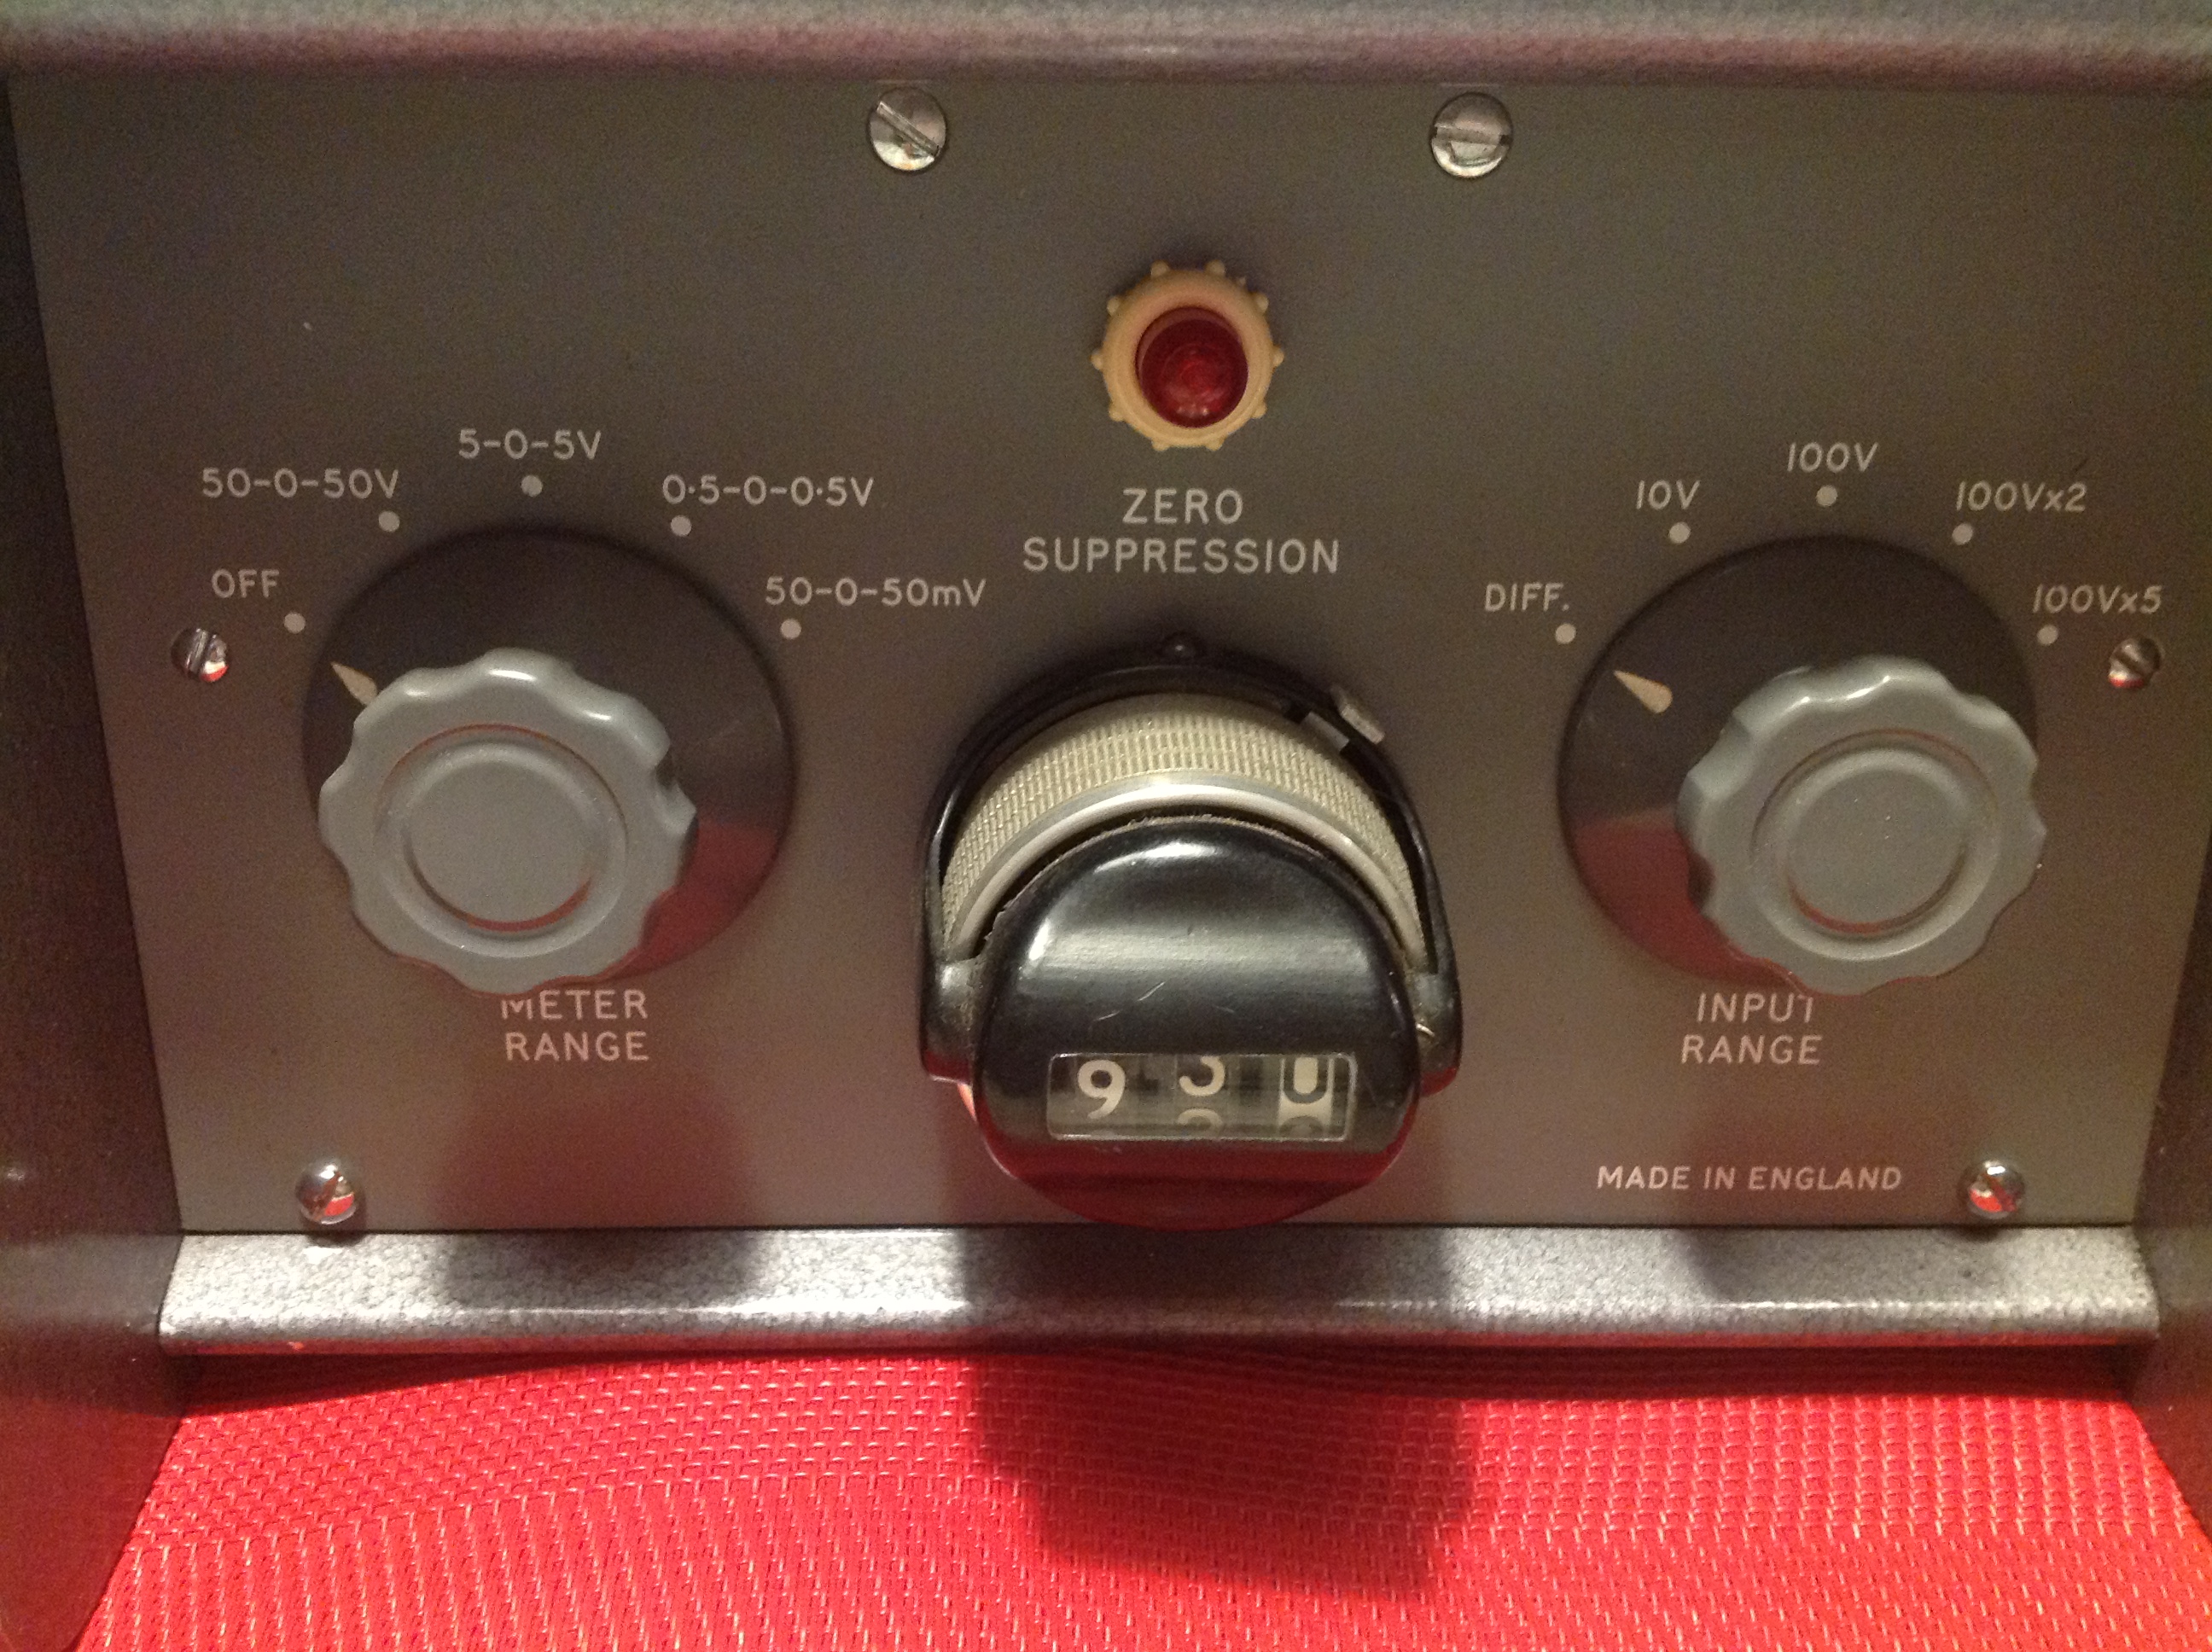 Marconi Suppressed Zero Voltmeter Mod. TF 1377